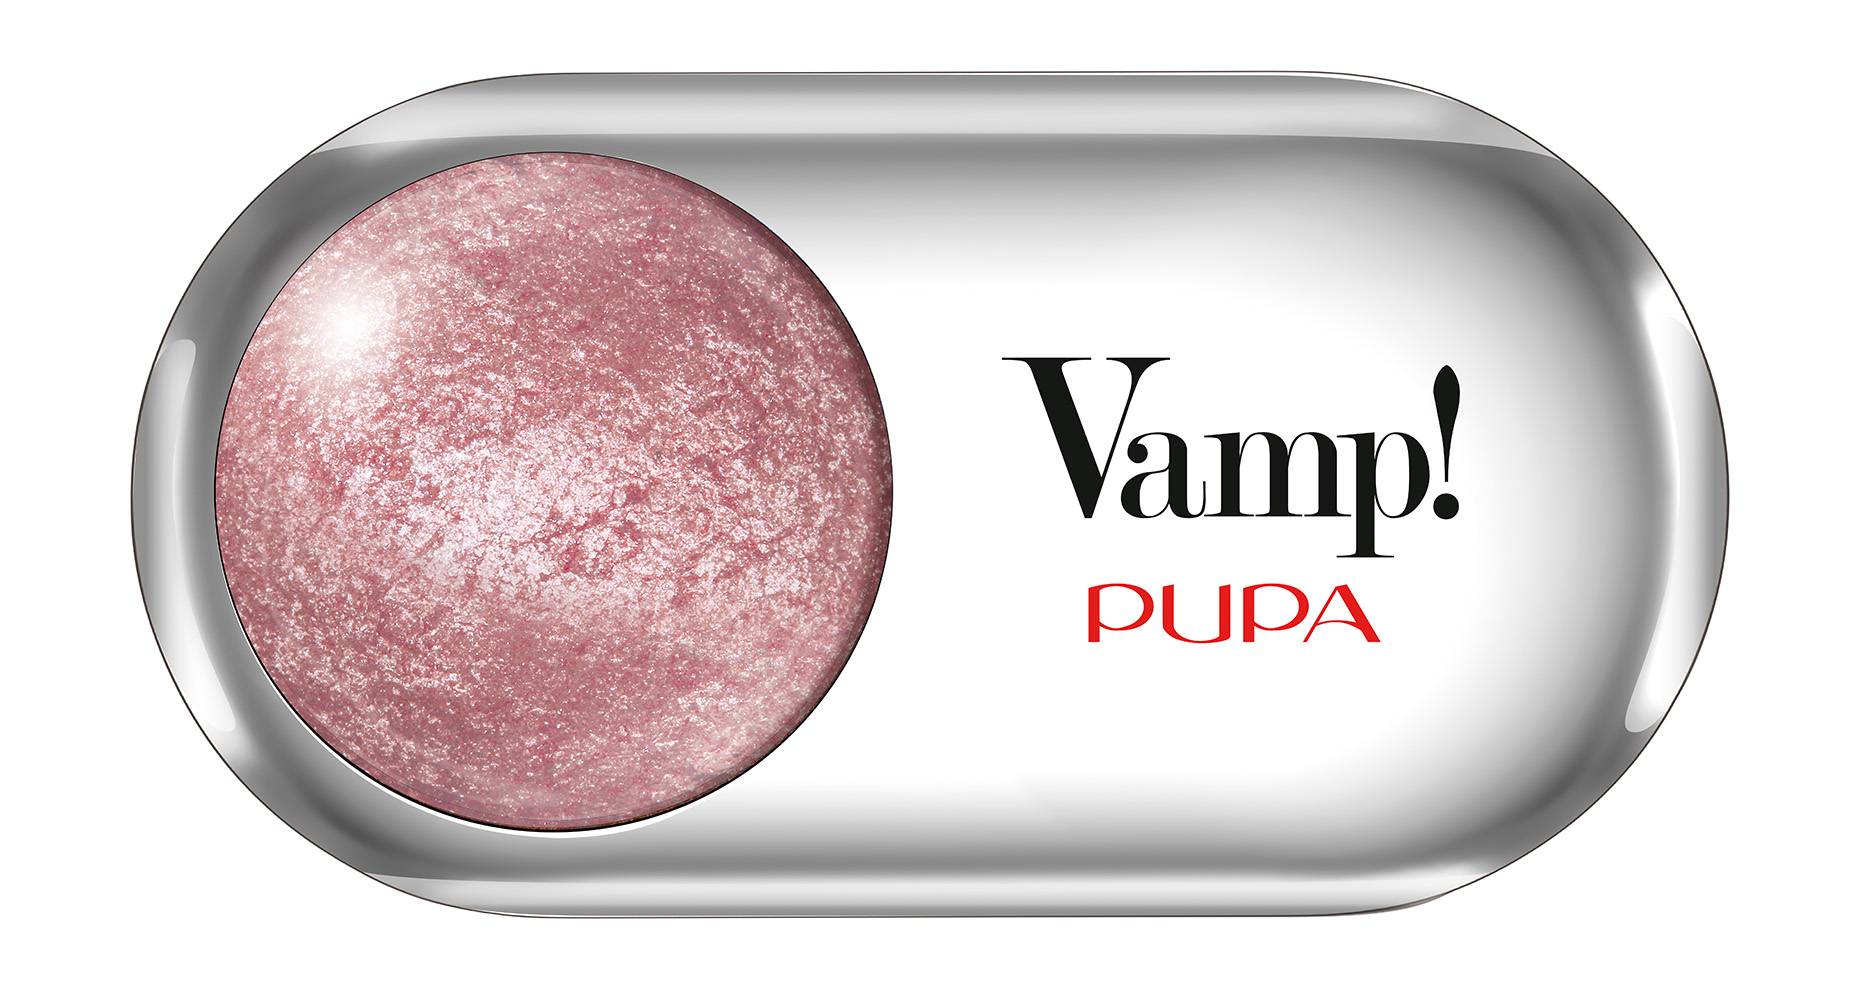 Запеченные тени для век Pupa Vamp! Wet&Dry Eyeshadow 105 EDEN ROSE pupa тени запеченные сияющие 105 райский розовый vamp wet